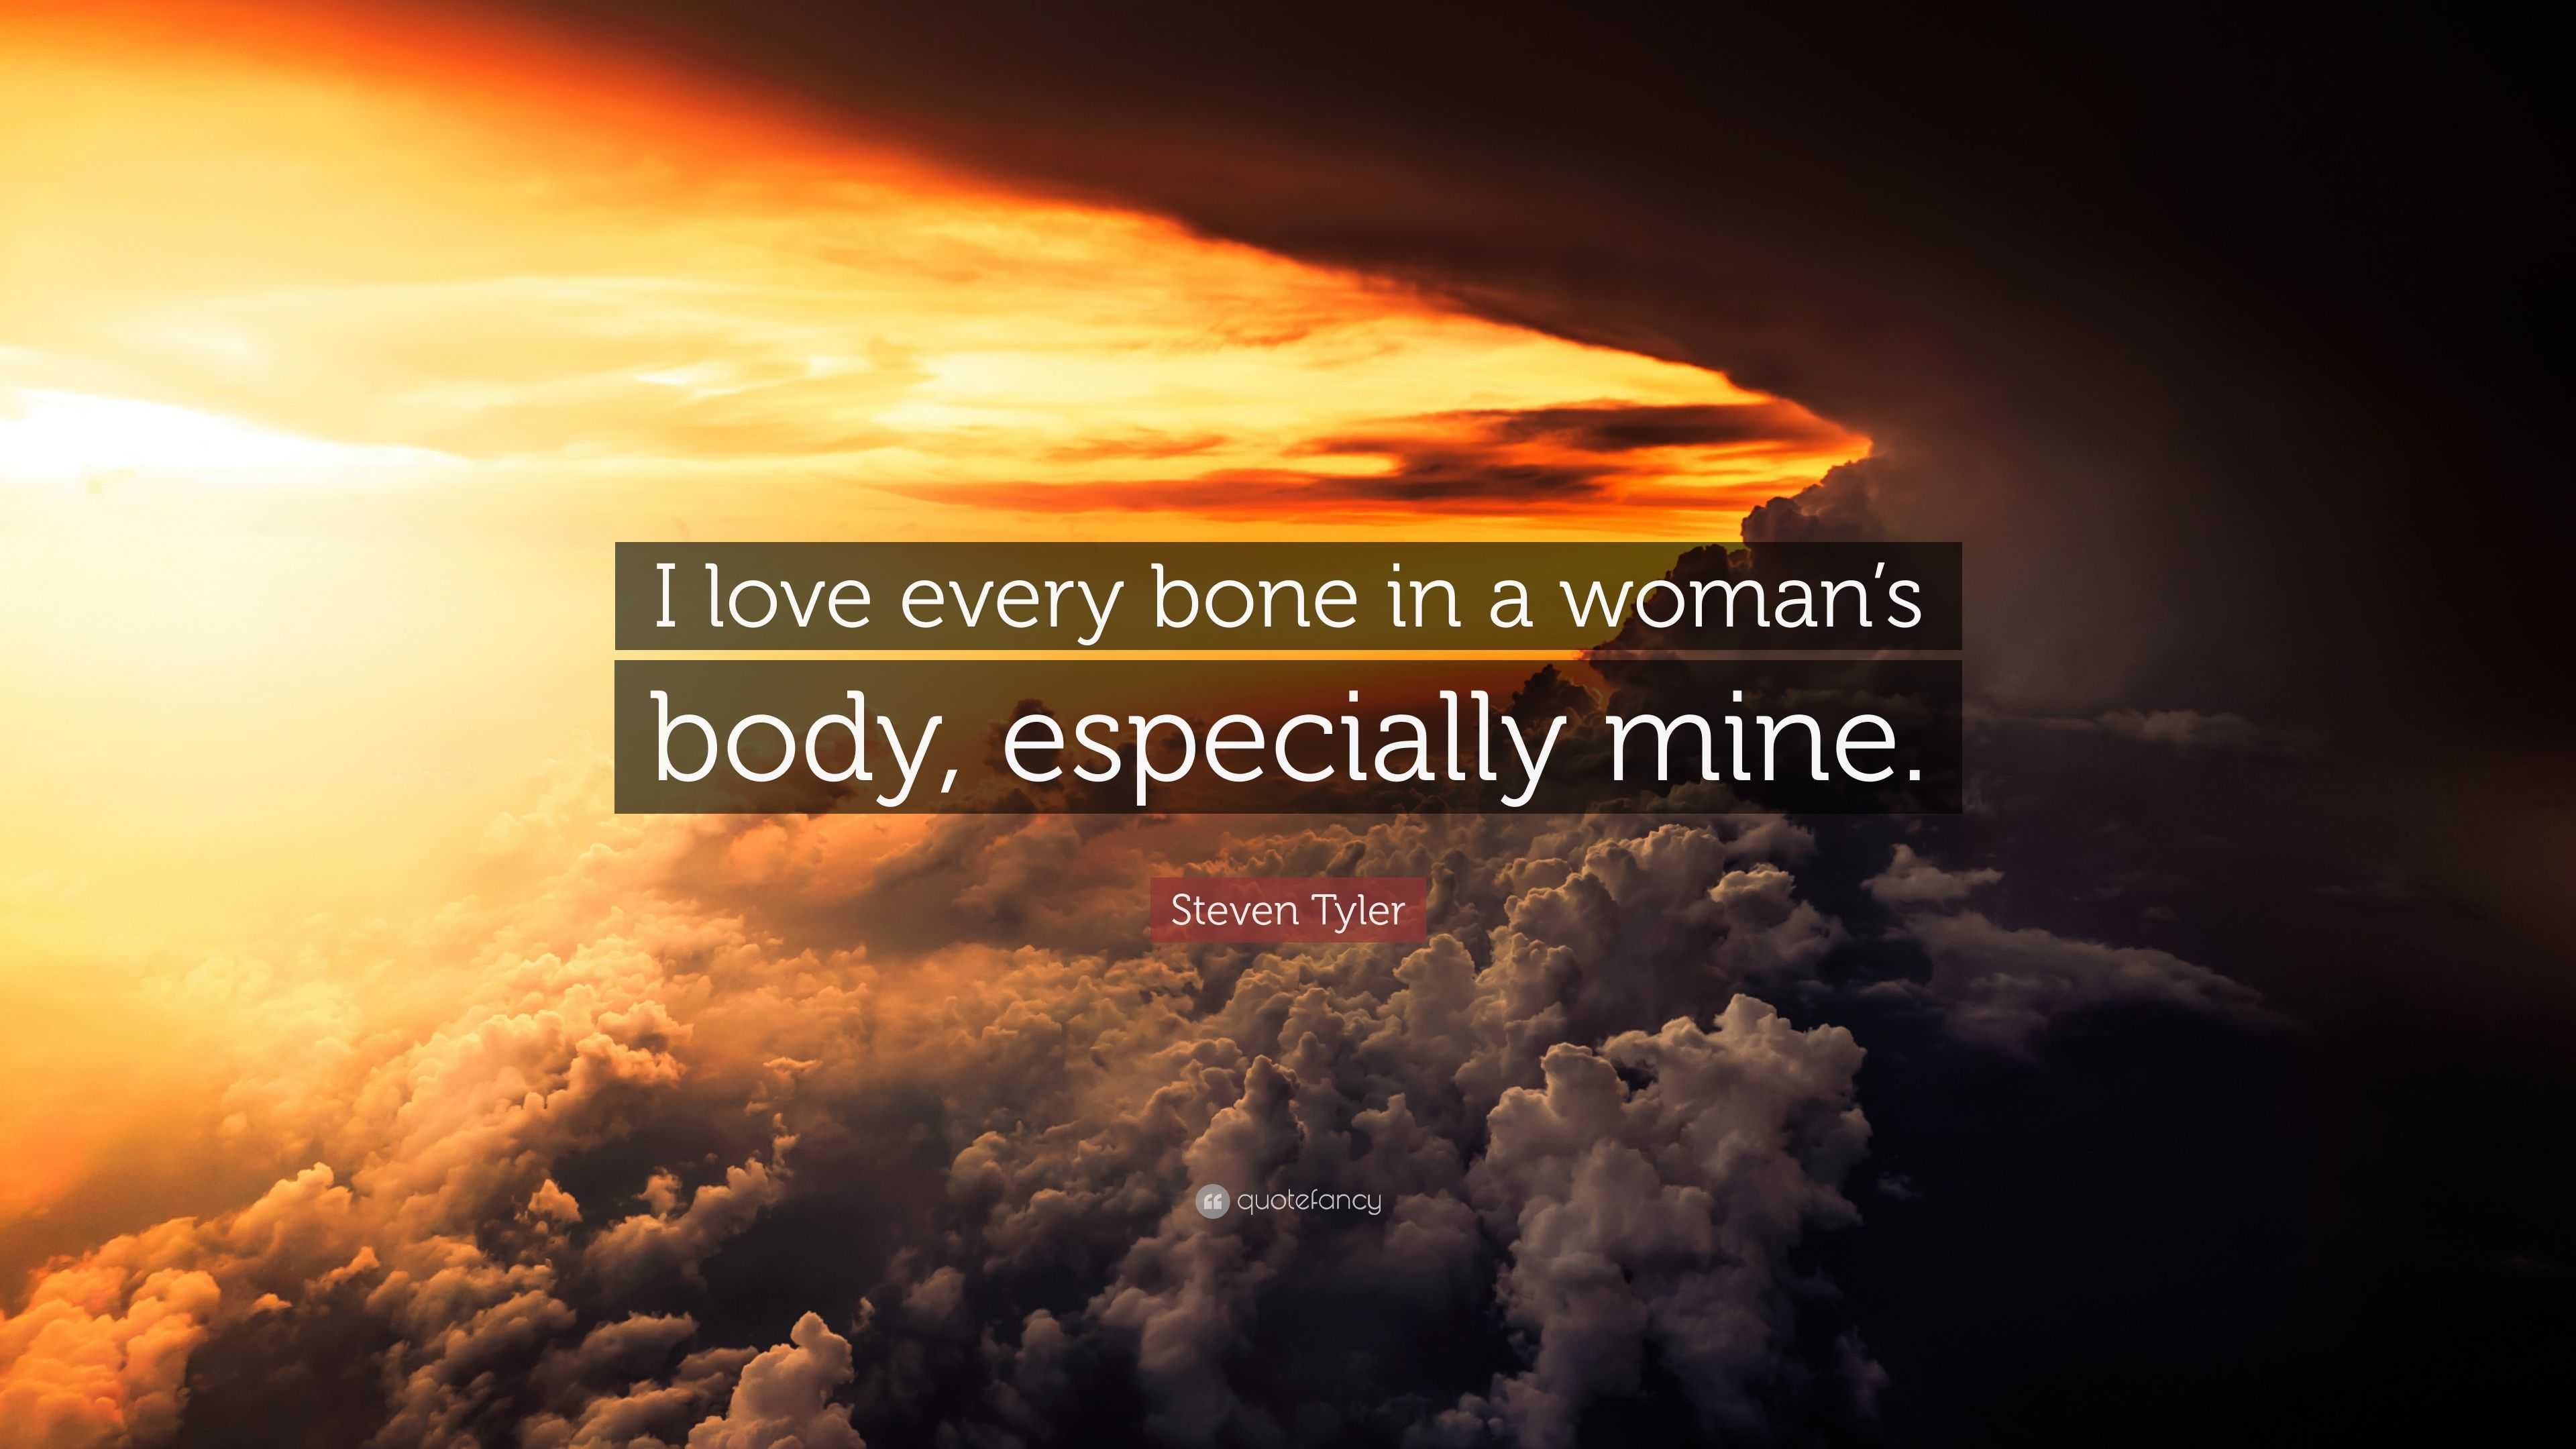 https://quotefancy.com/media/wallpaper/3840x2160/5536413-Steven-Tyler-Quote-I-love-every-bone-in-a-woman-s-body-especially.jpg